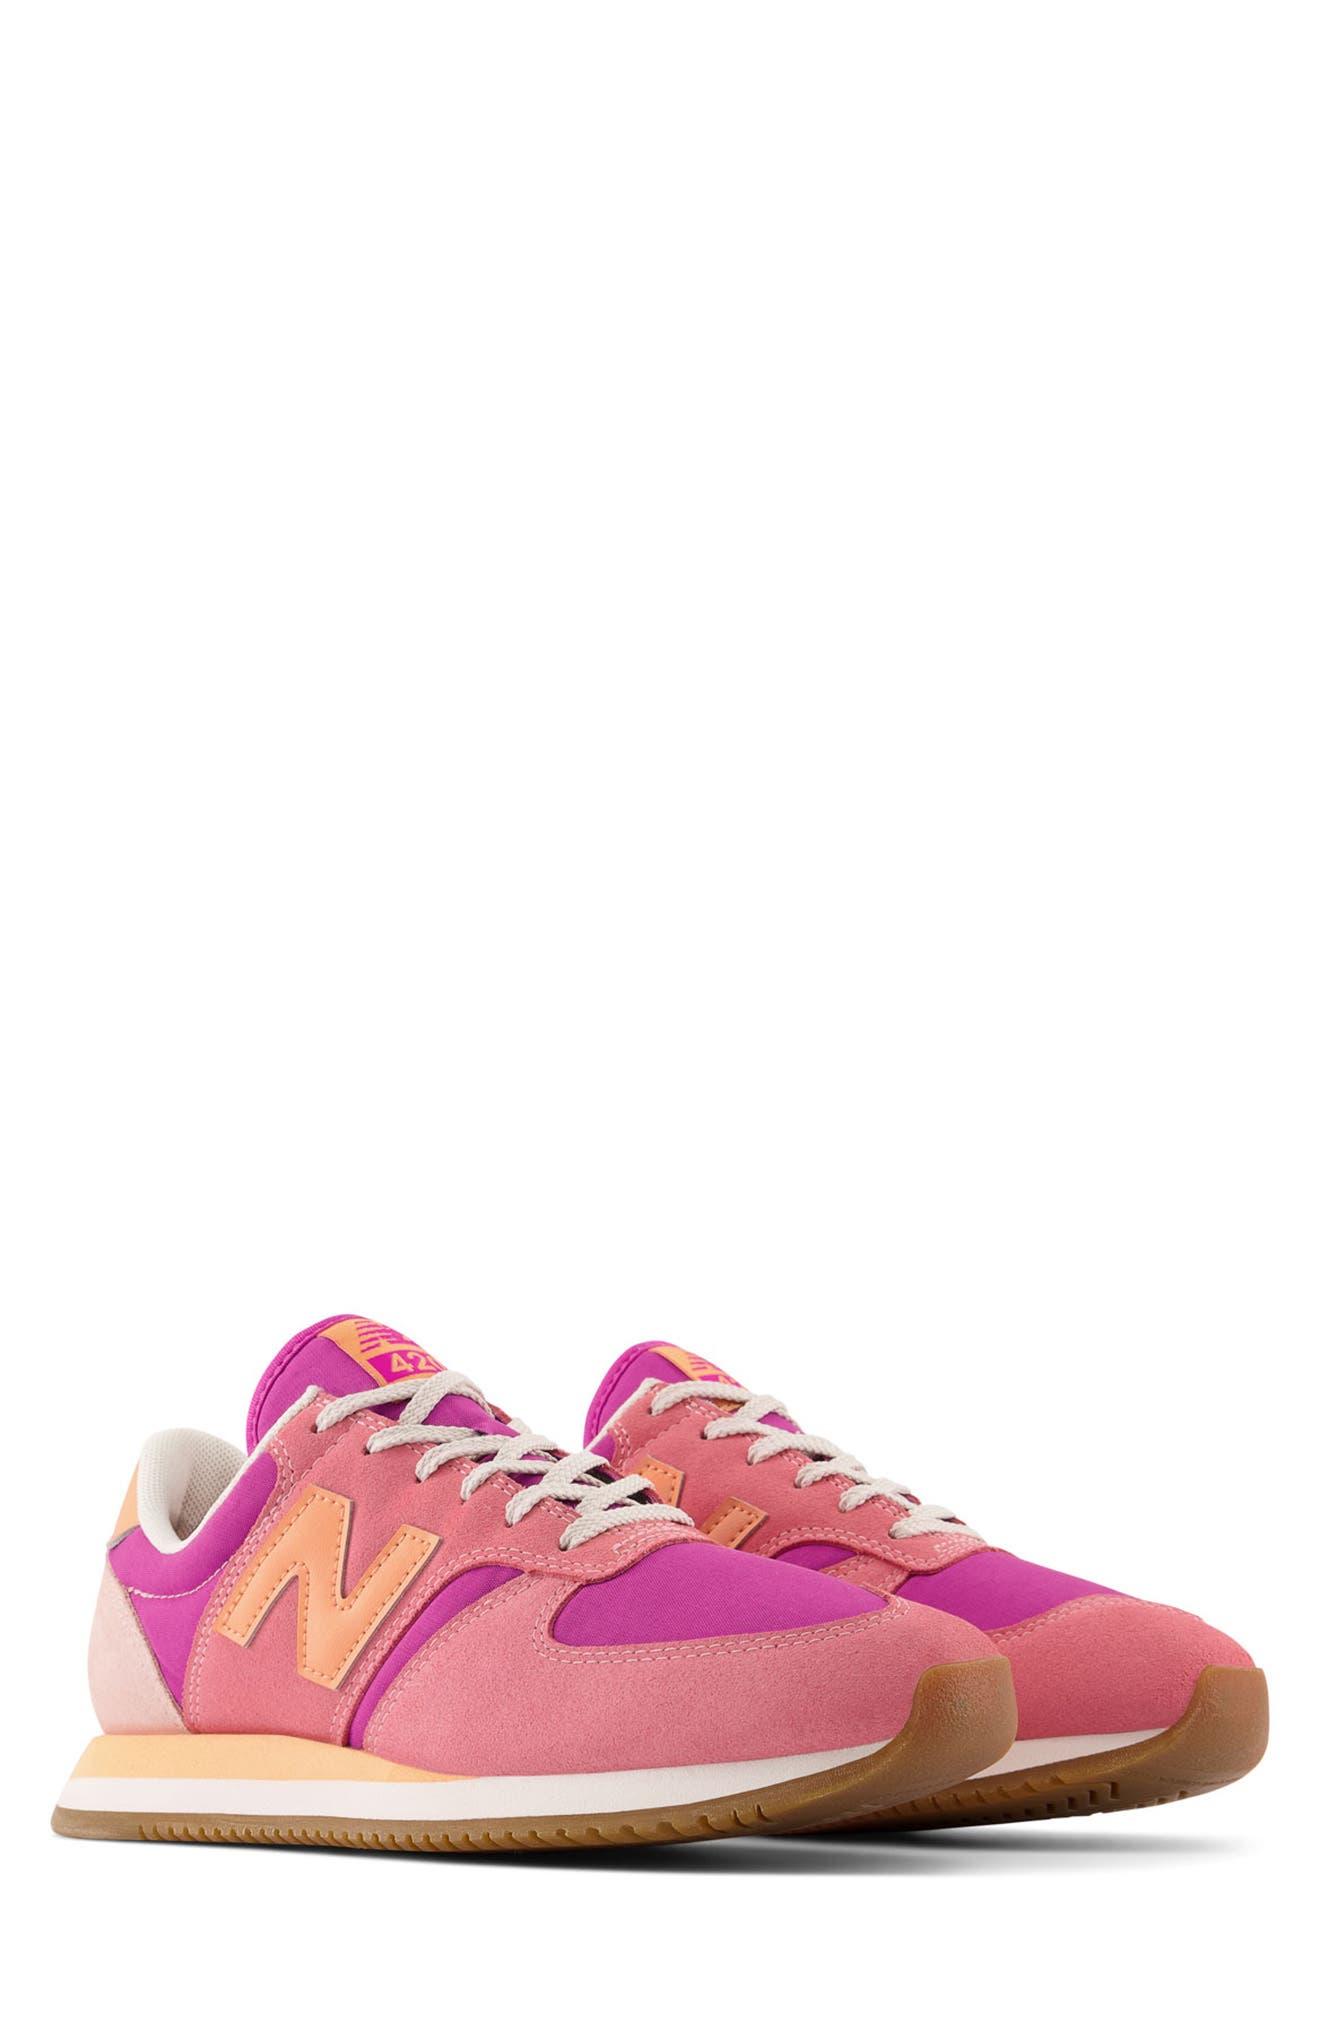 New Balance 420 Colorblock Sneaker In Magenta Pop/purple At Nordstrom Rack  in Pink | Lyst